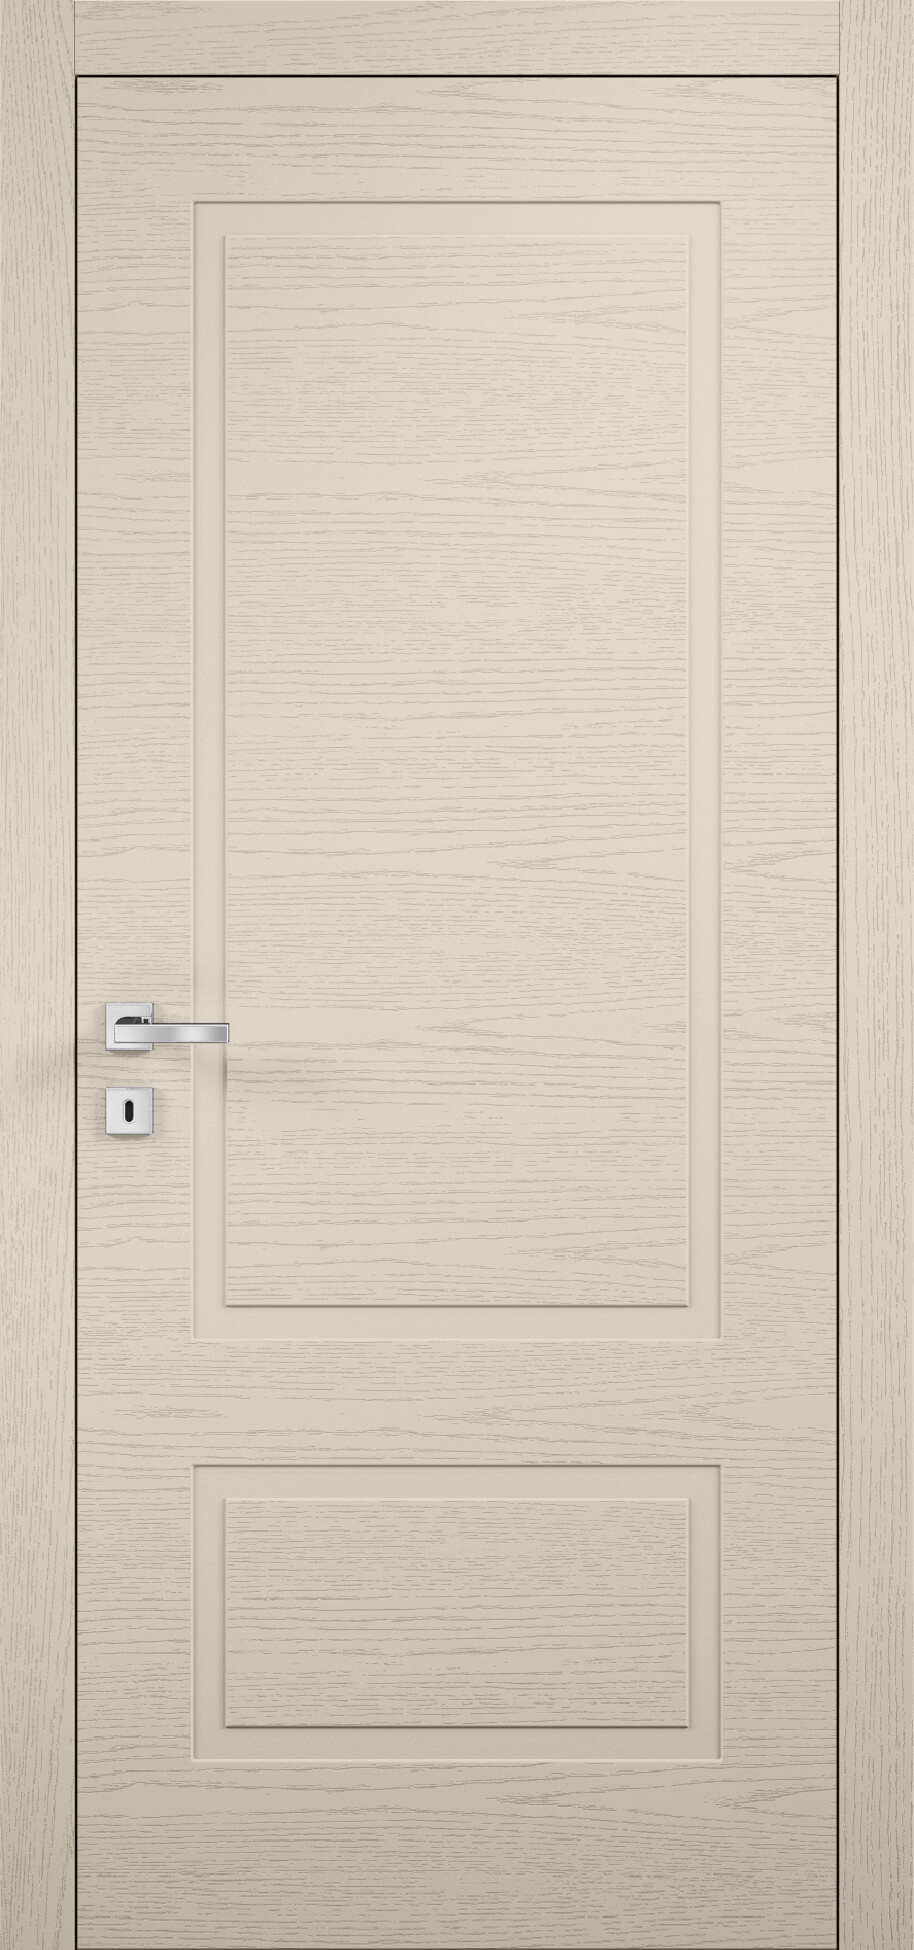 межкомнатные двери эмалированная межкомнатная дверь glamour 104 эмаль аворио